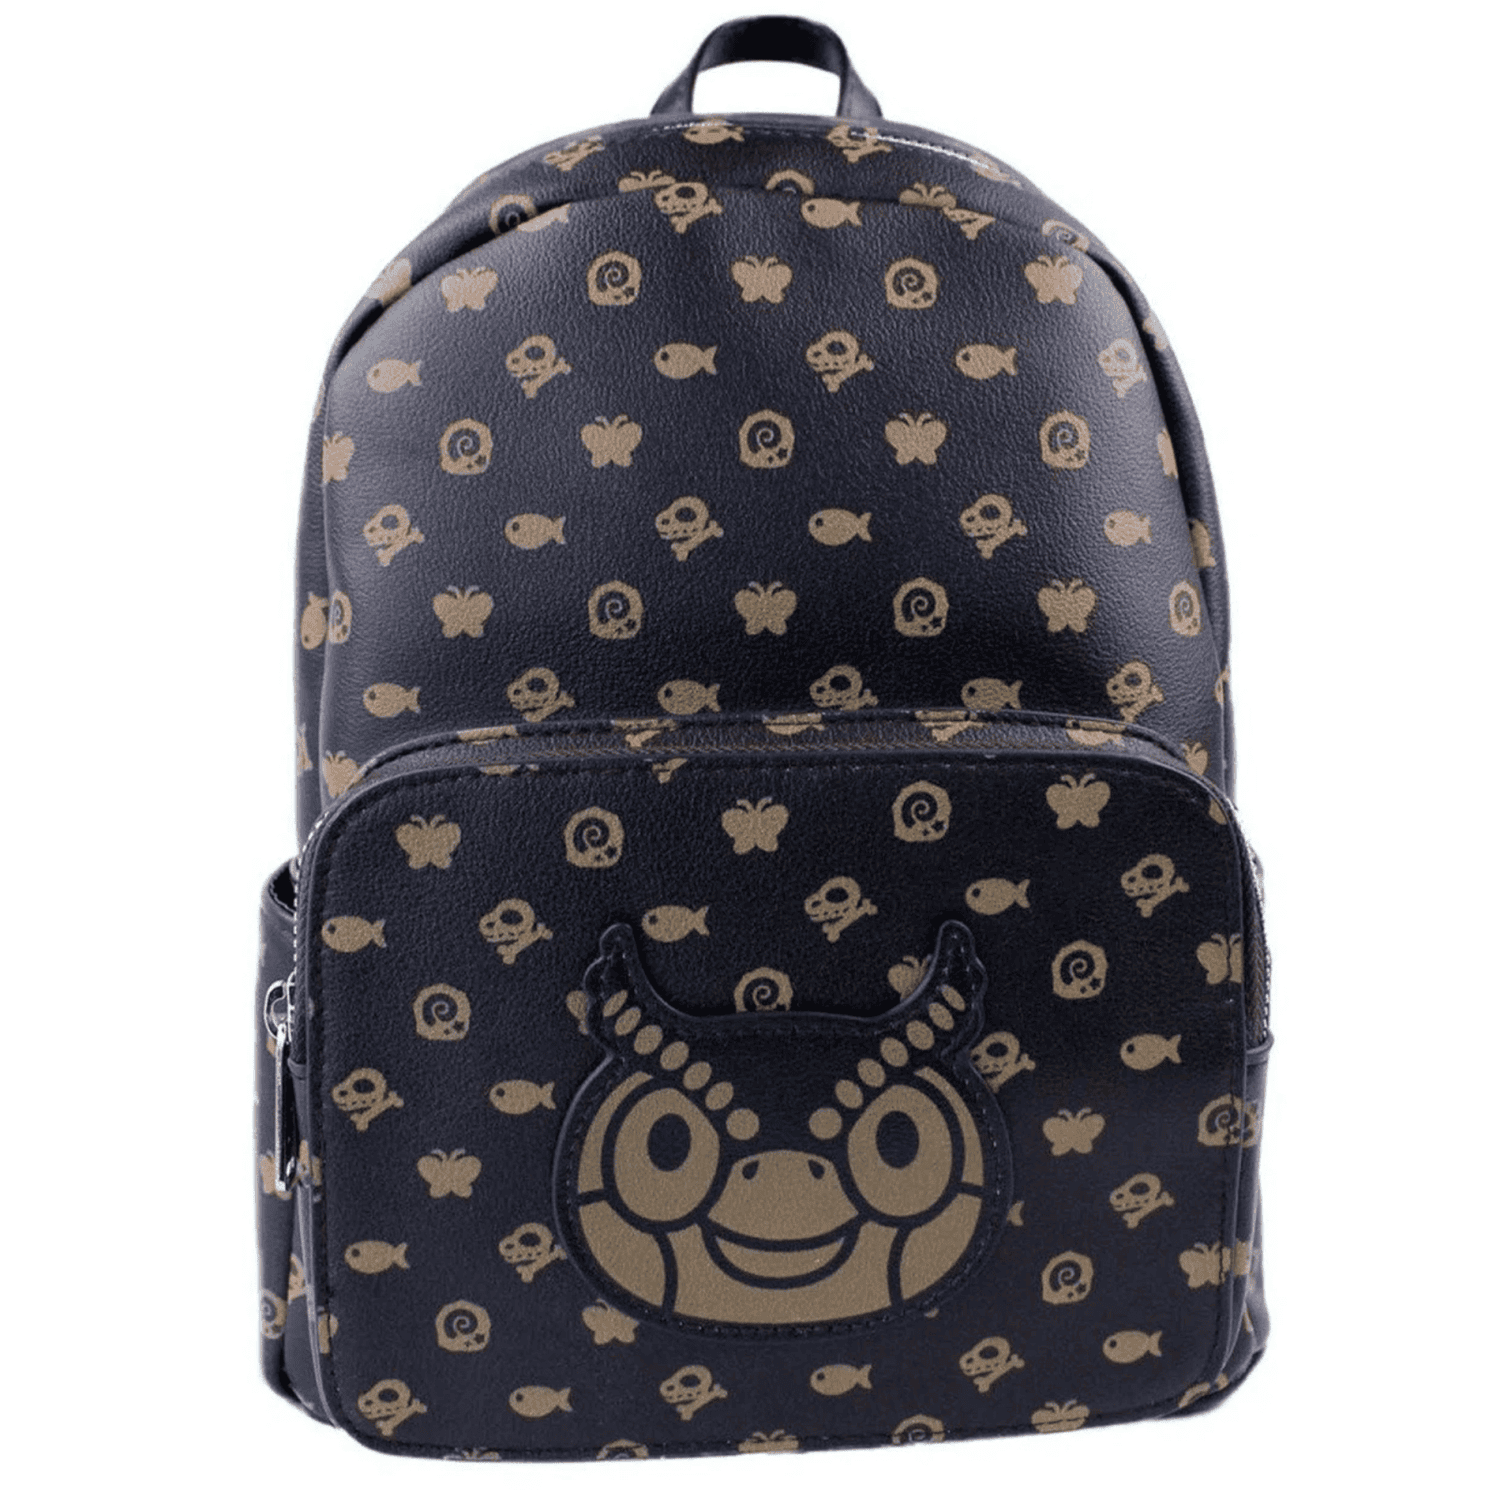 Cakeworthy Animal Crossing Blathers Mini Backpack